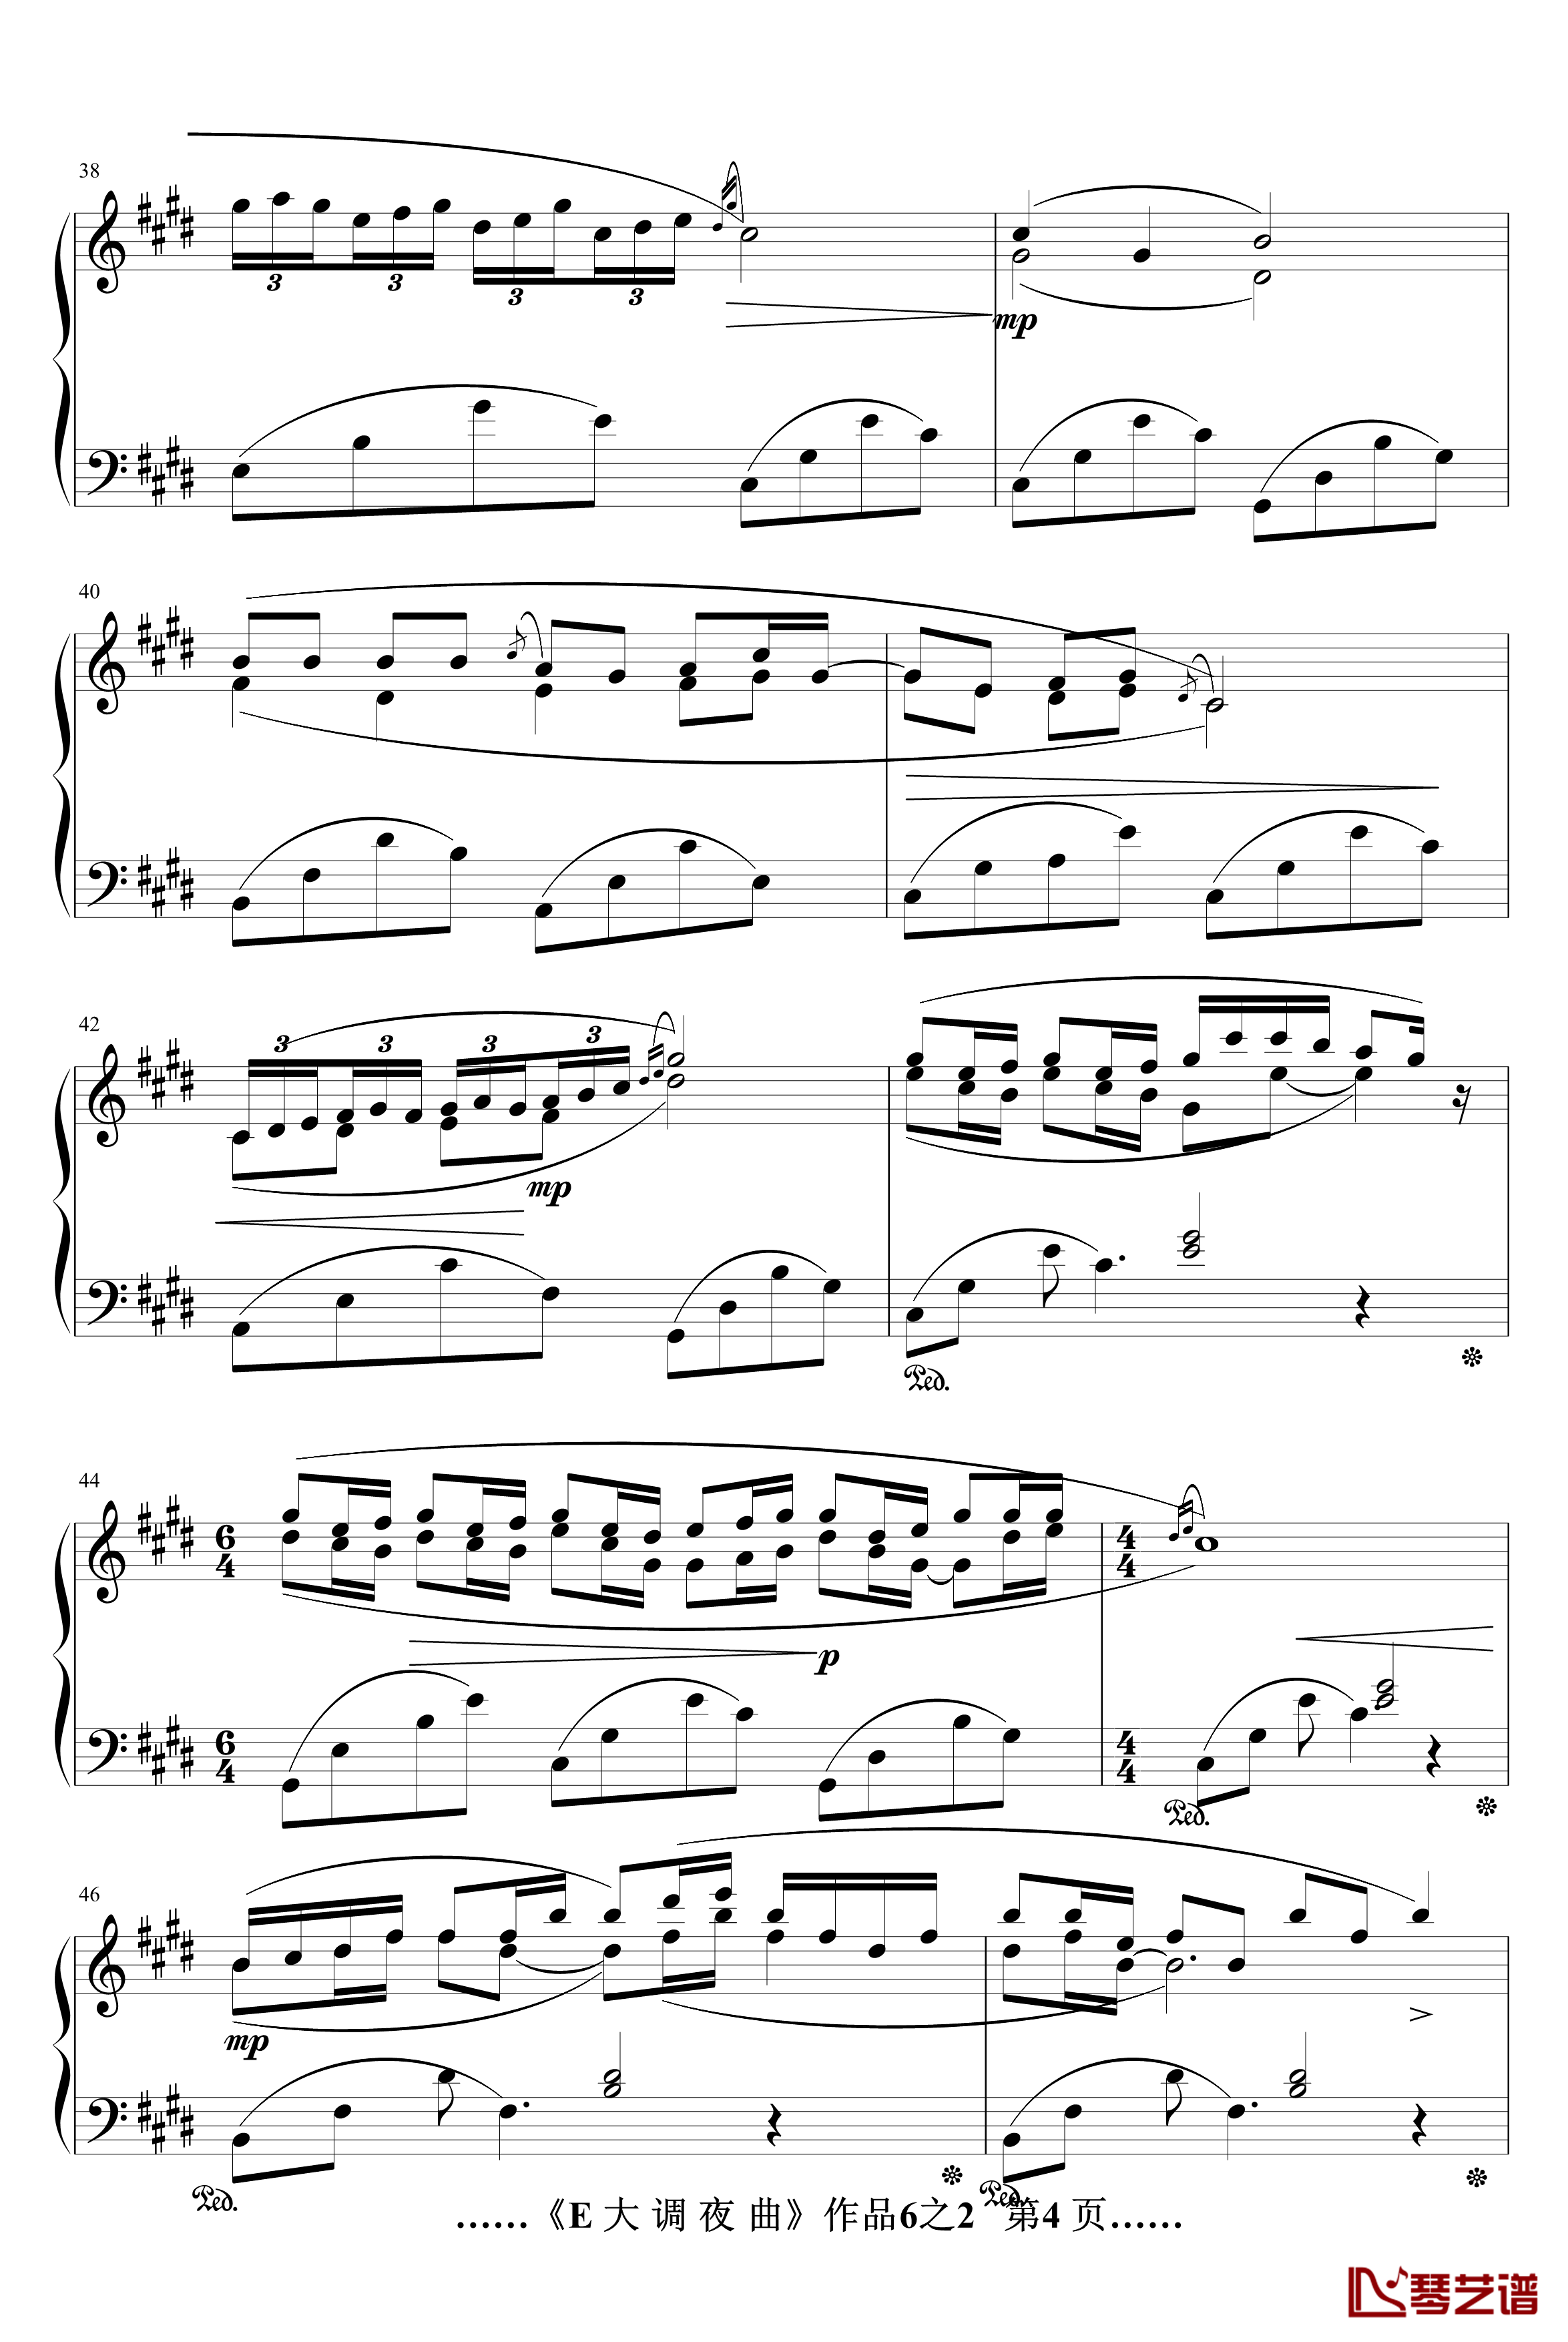 E大调夜曲op6.2钢琴谱-080810-jerry5743